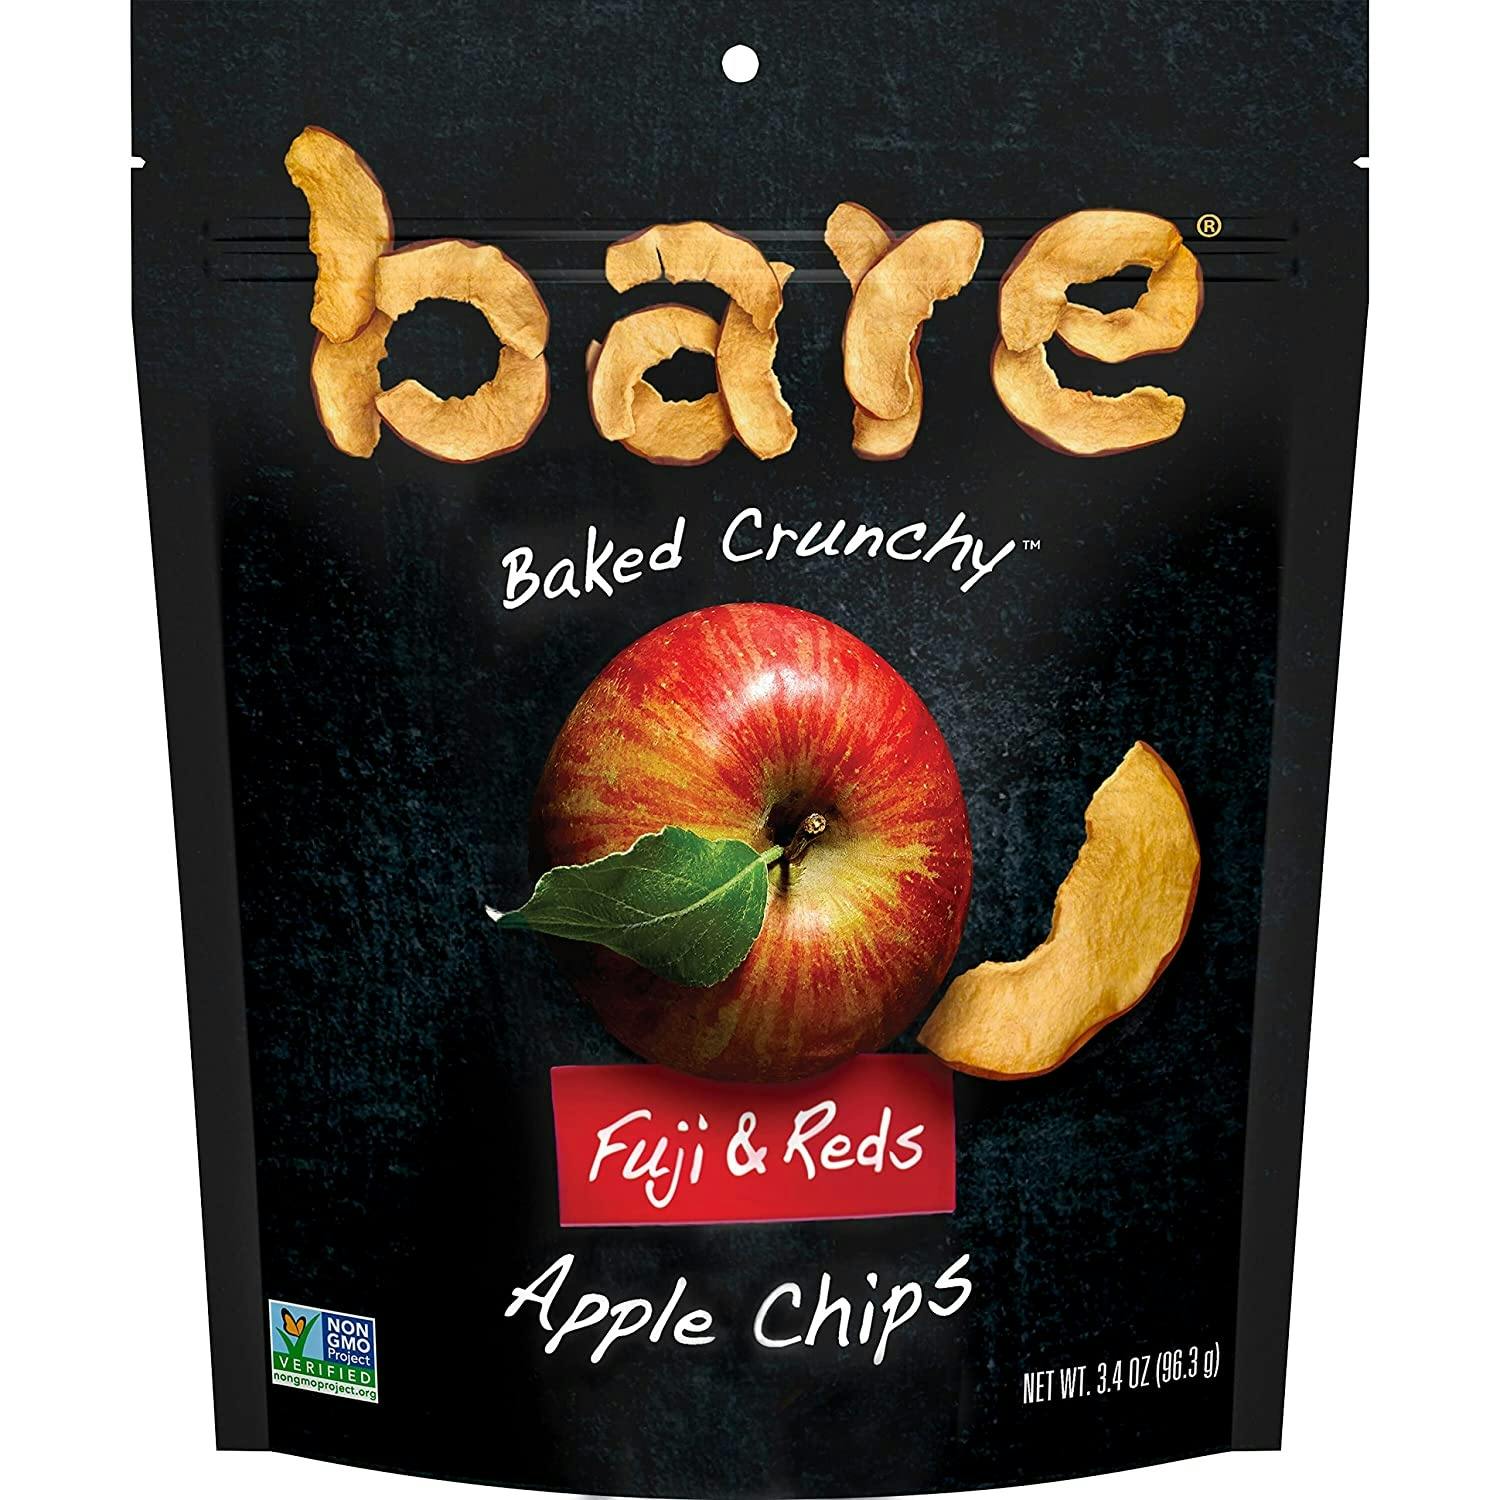 Bare Baked Crunchy Apple Chips